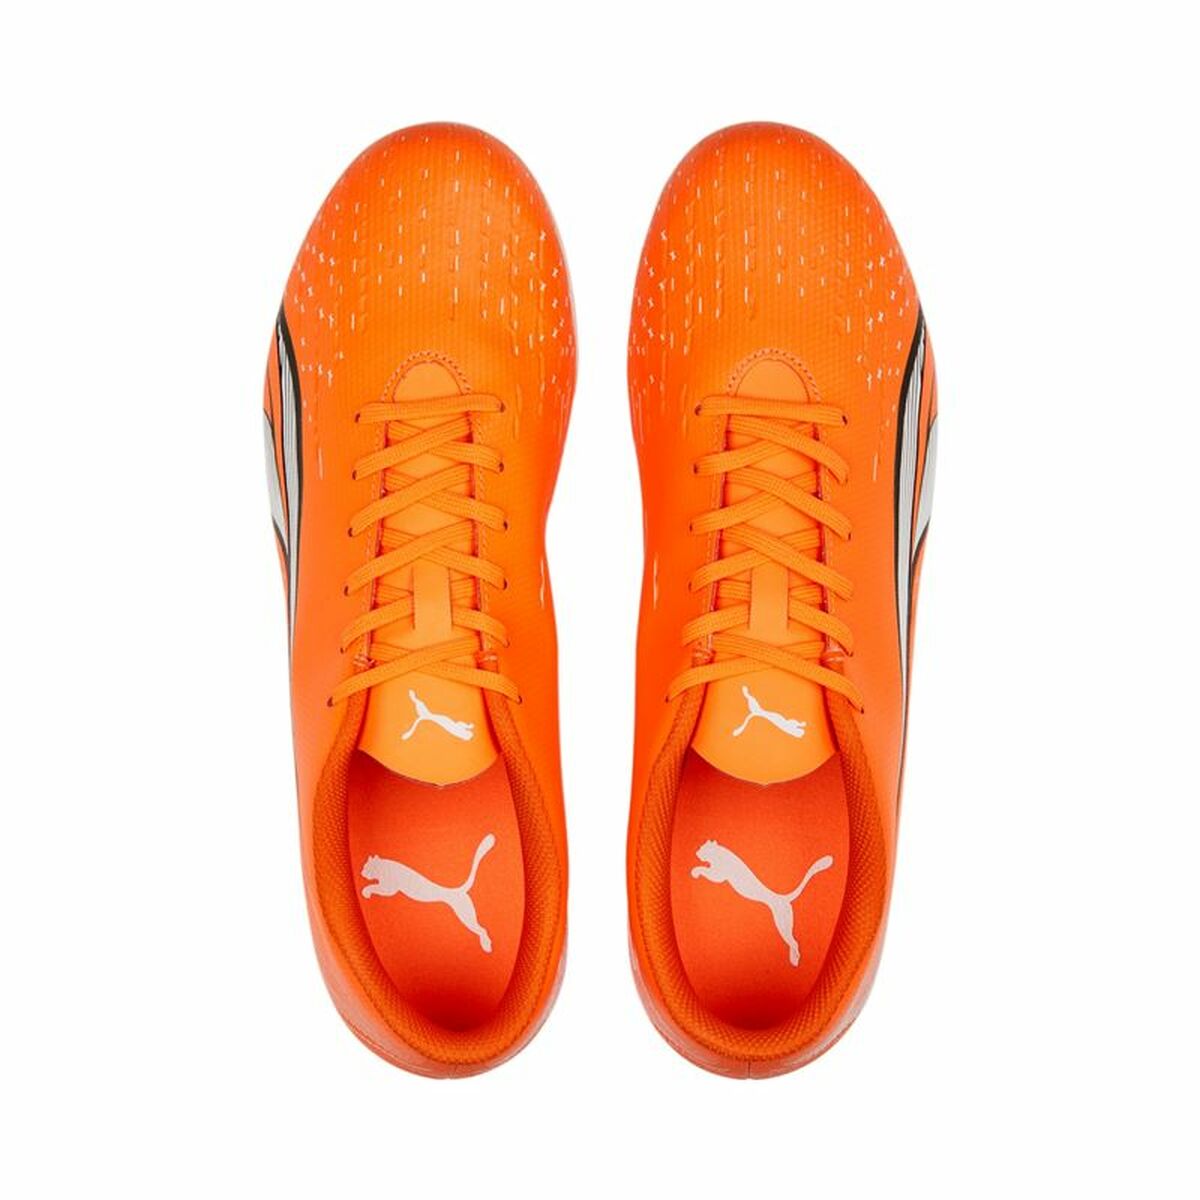 Chaussures de Football pour Adultes Puma Ultra Play Mg Orange Unisexe